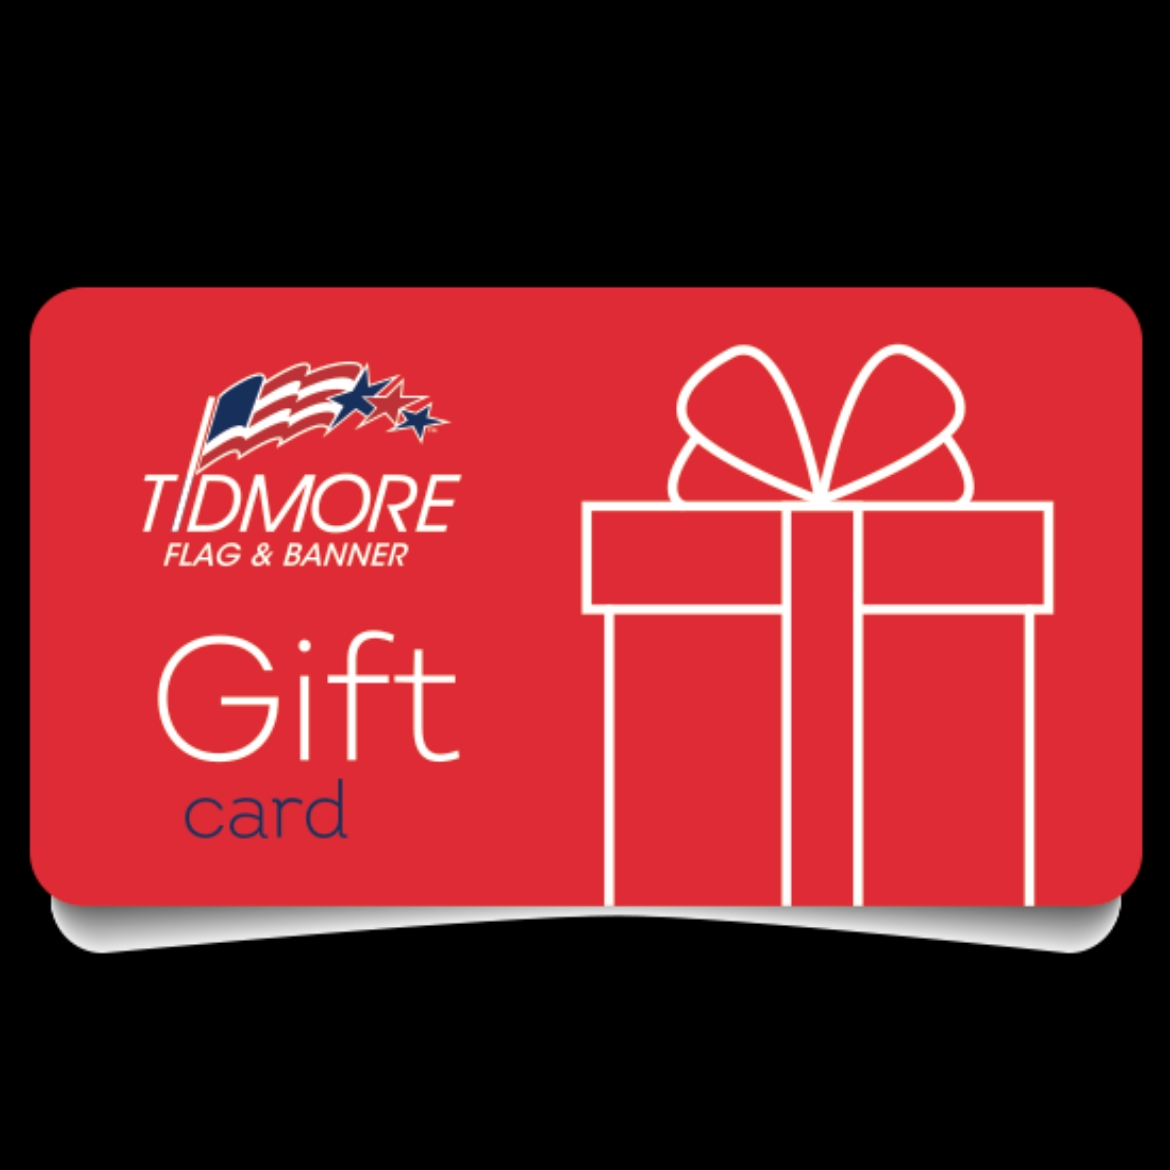 Tidmore Gift Card Image.png